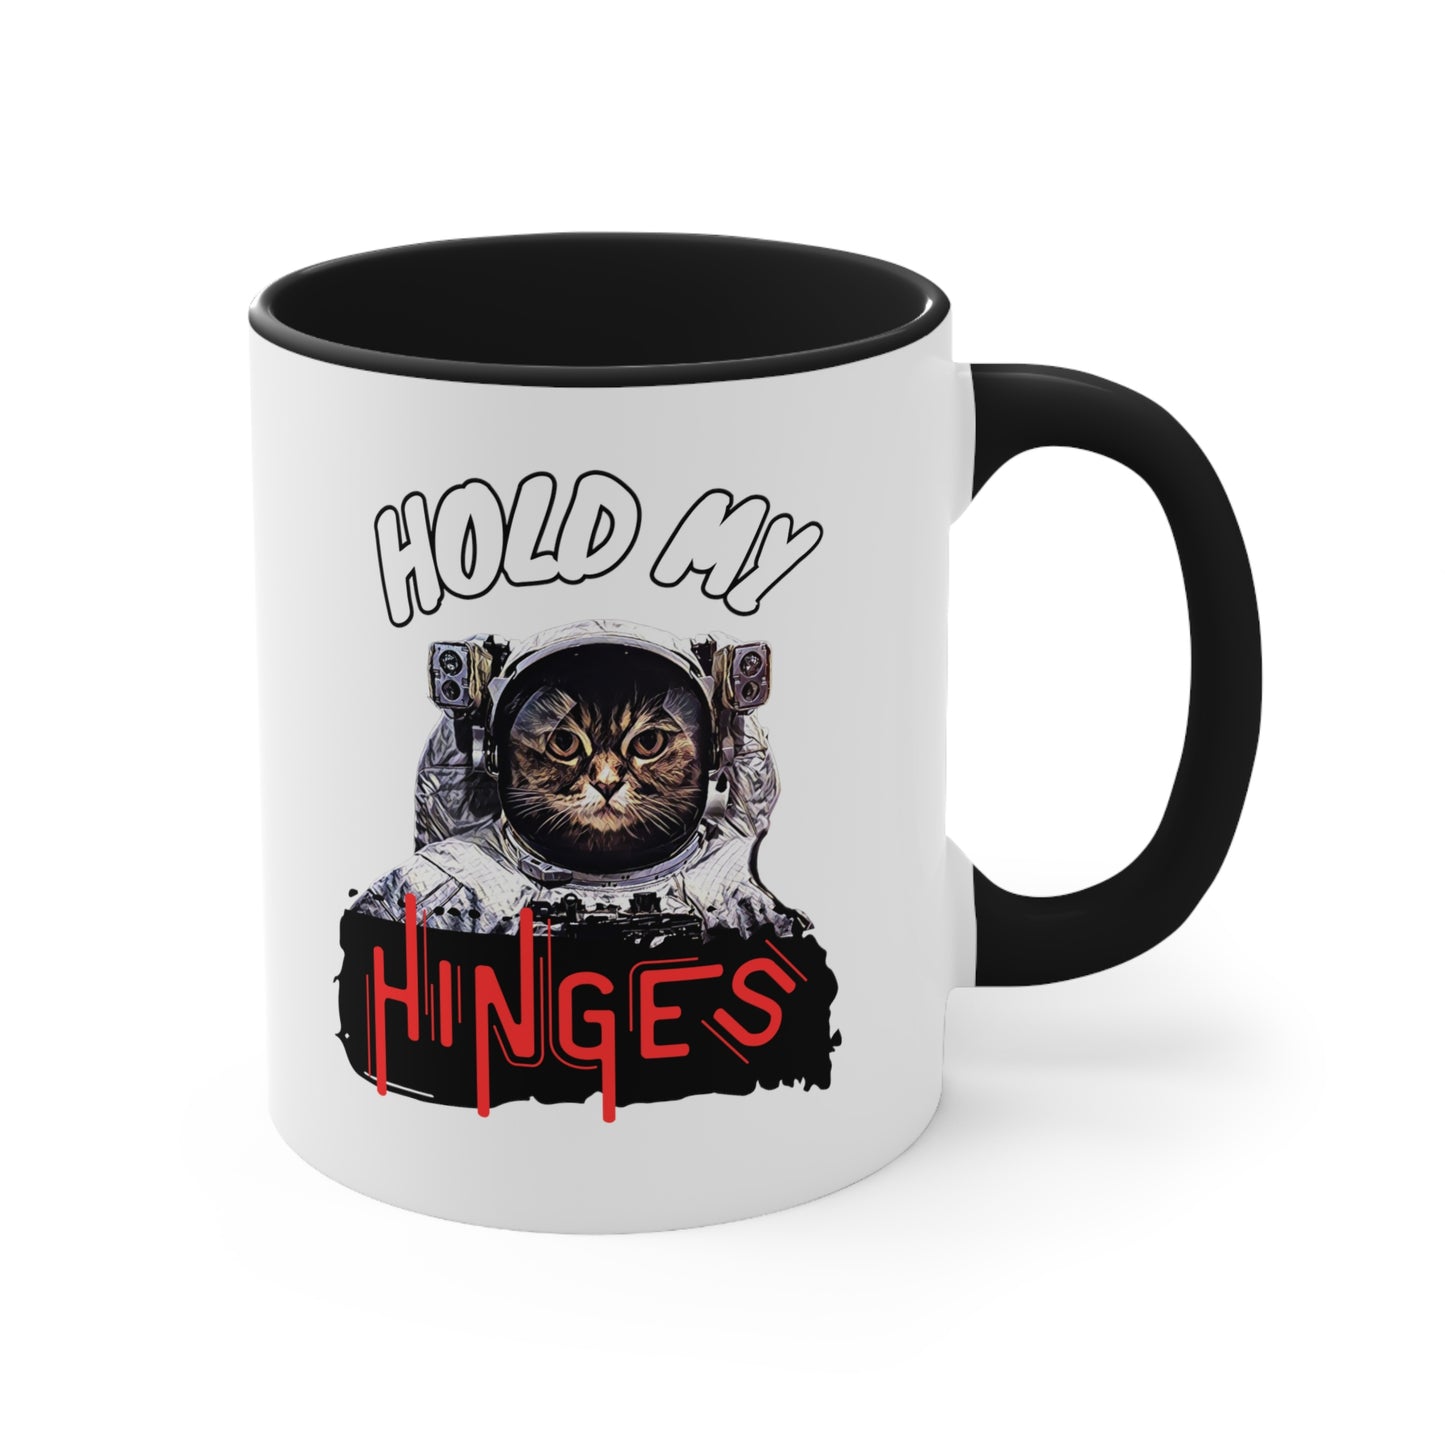 Hold My Hinges - Accent Coffee Mug, 11oz